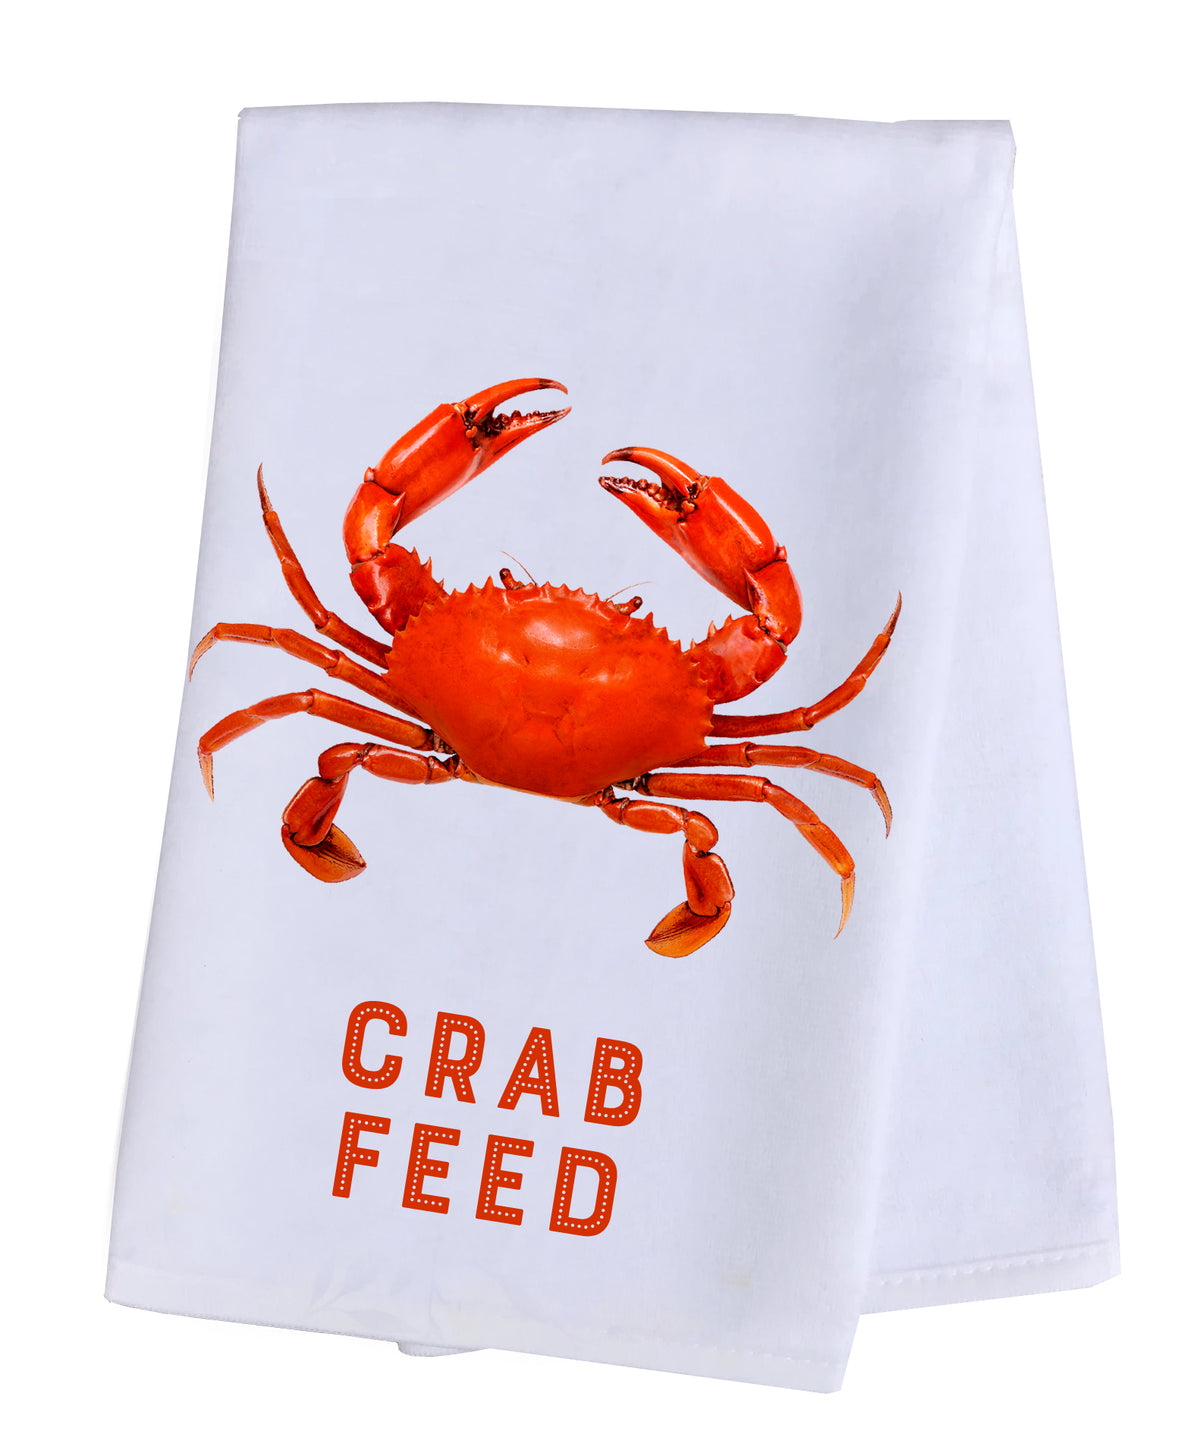 Hand Towel Plush - Crab Feed!